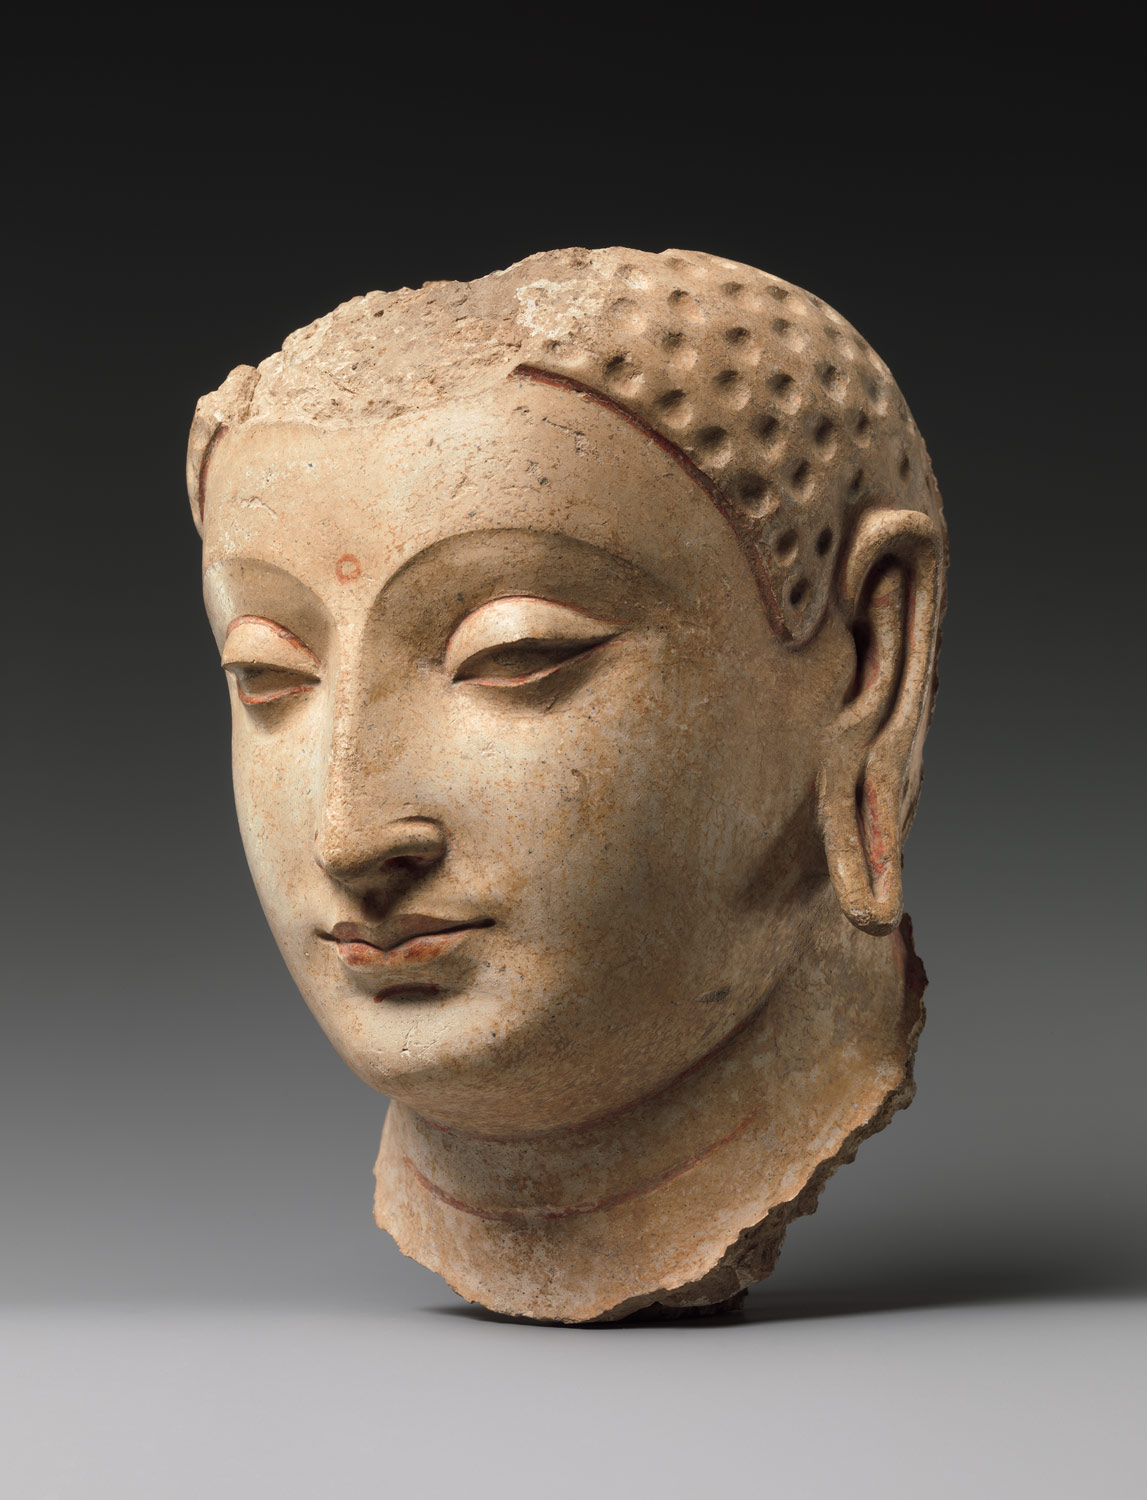 Head Of Buddha Work Of Art Heilbrunn Timeline Of Art History The